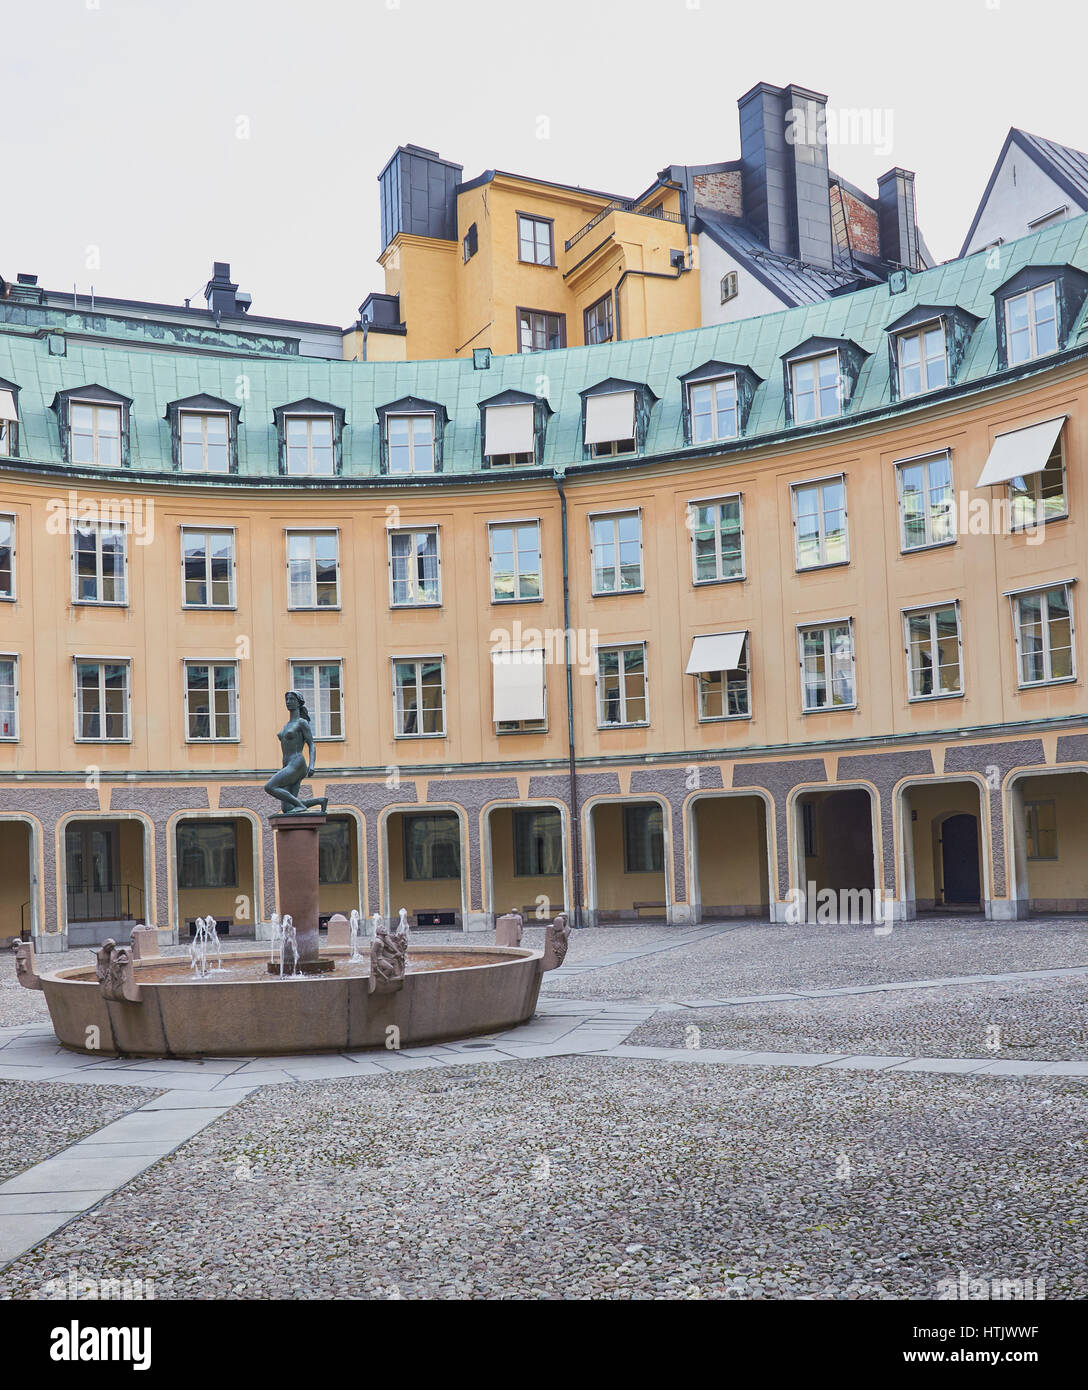 La scultura "orgone" (mattina) da Ivar Johnsson (1962), Brantingtorget (19540's), Gamla Stan, Stoccolma, Svezia e Scandinavia Foto Stock